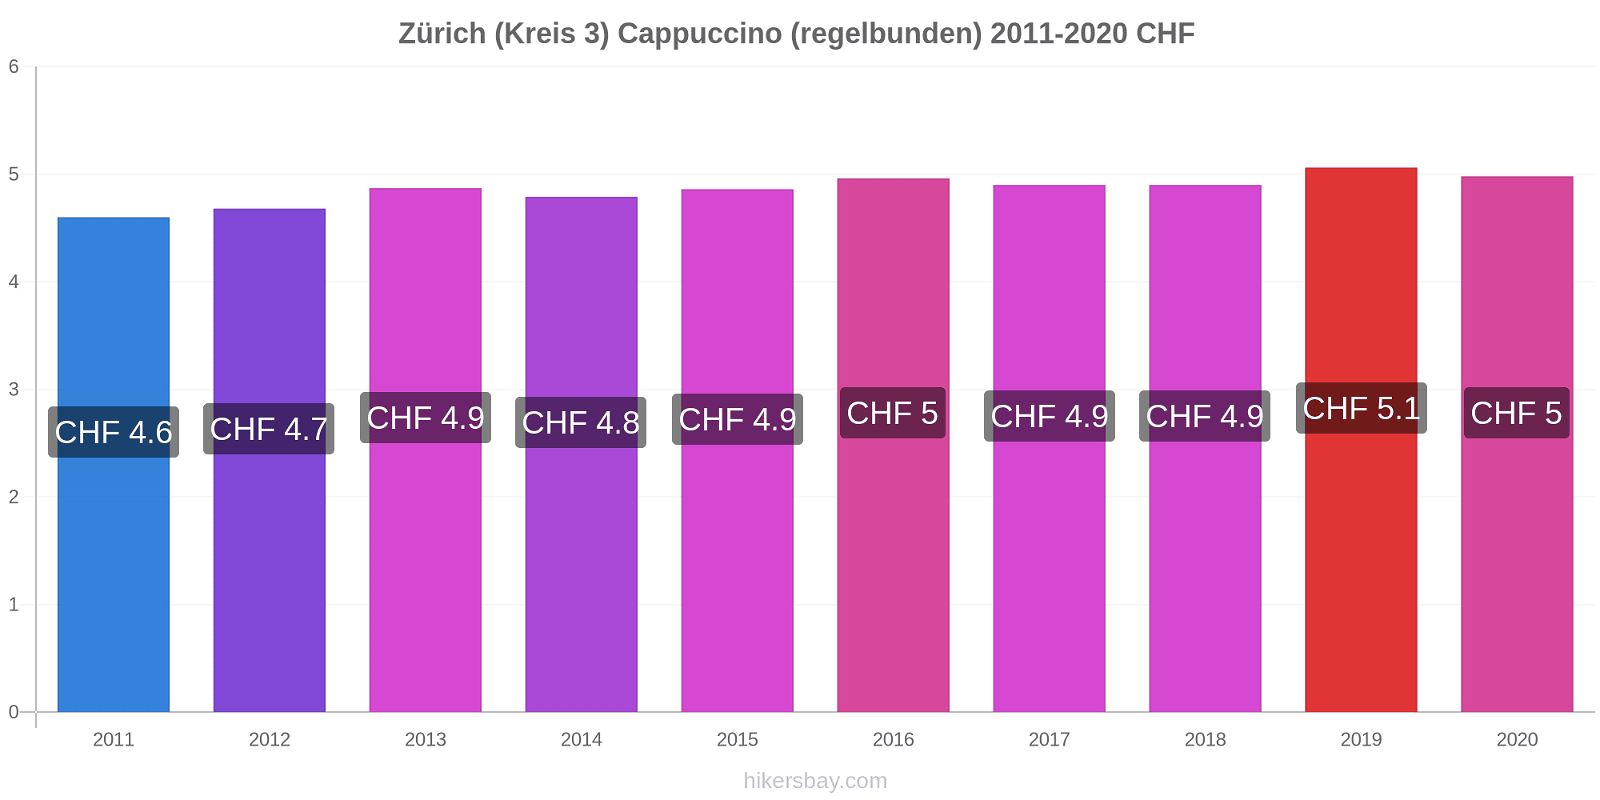 Zürich (Kreis 3) prisförändringar Cappuccino (regelbunden) hikersbay.com